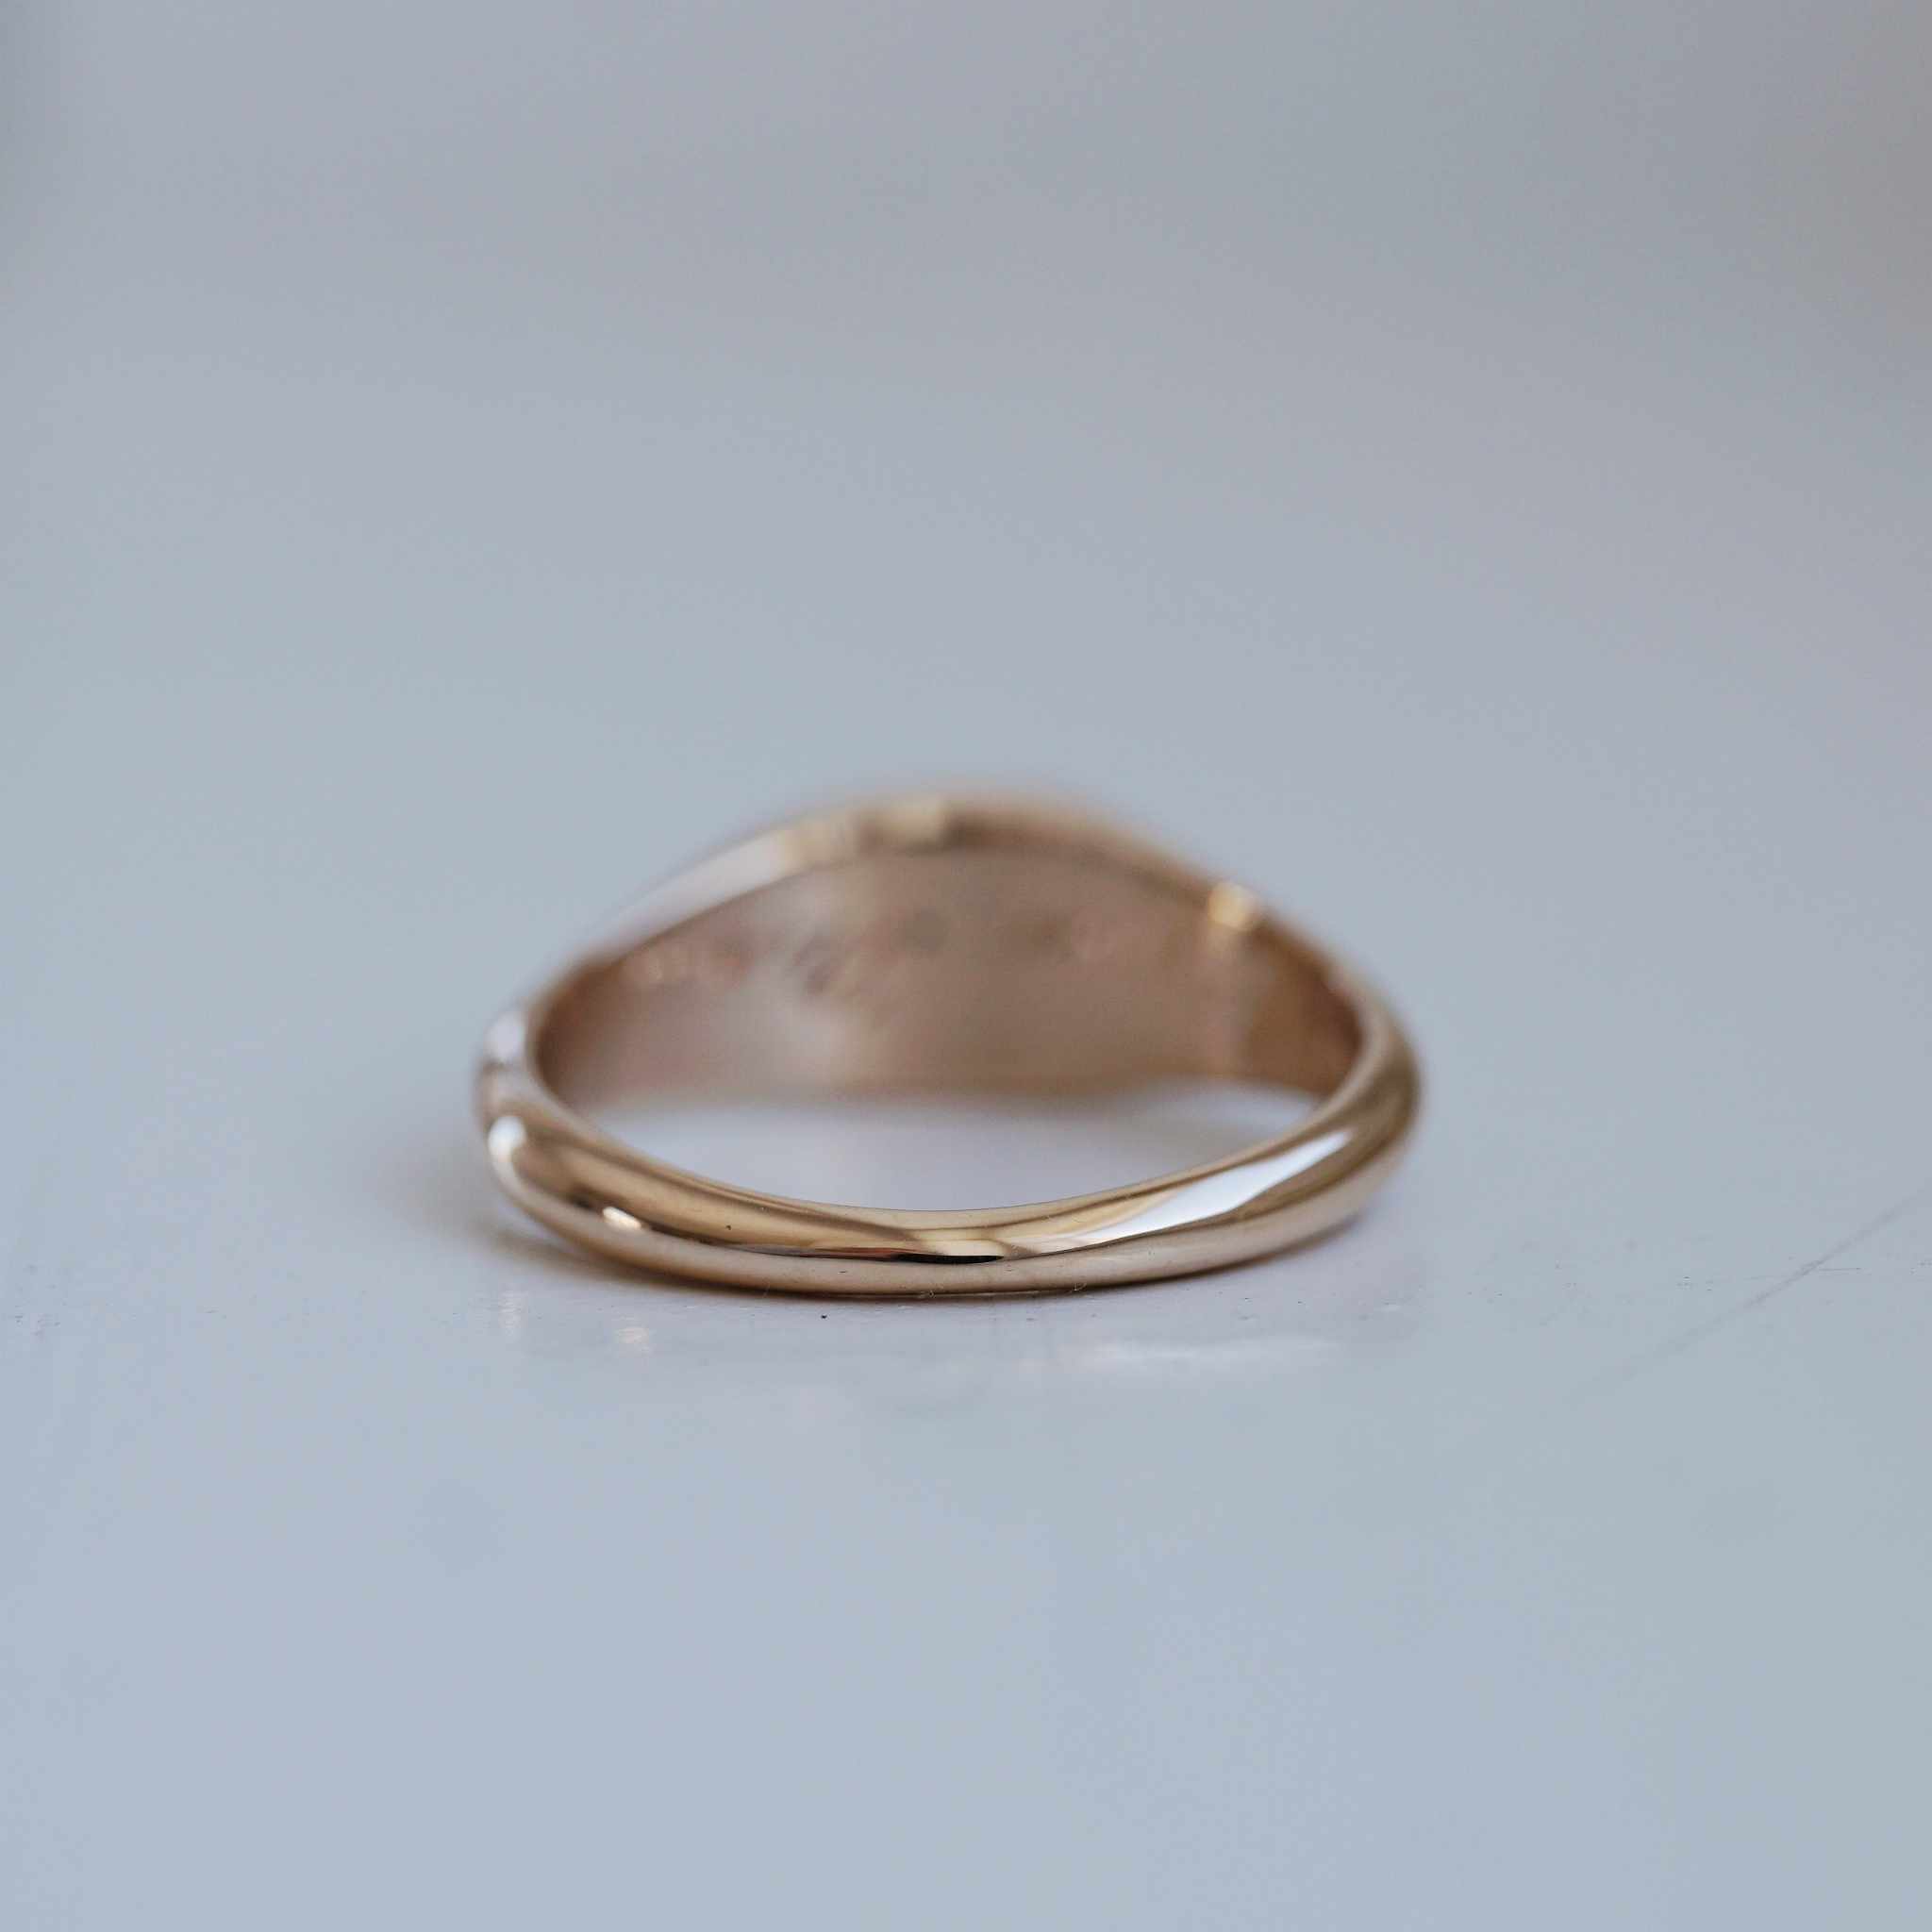 "Roine" ring in gold